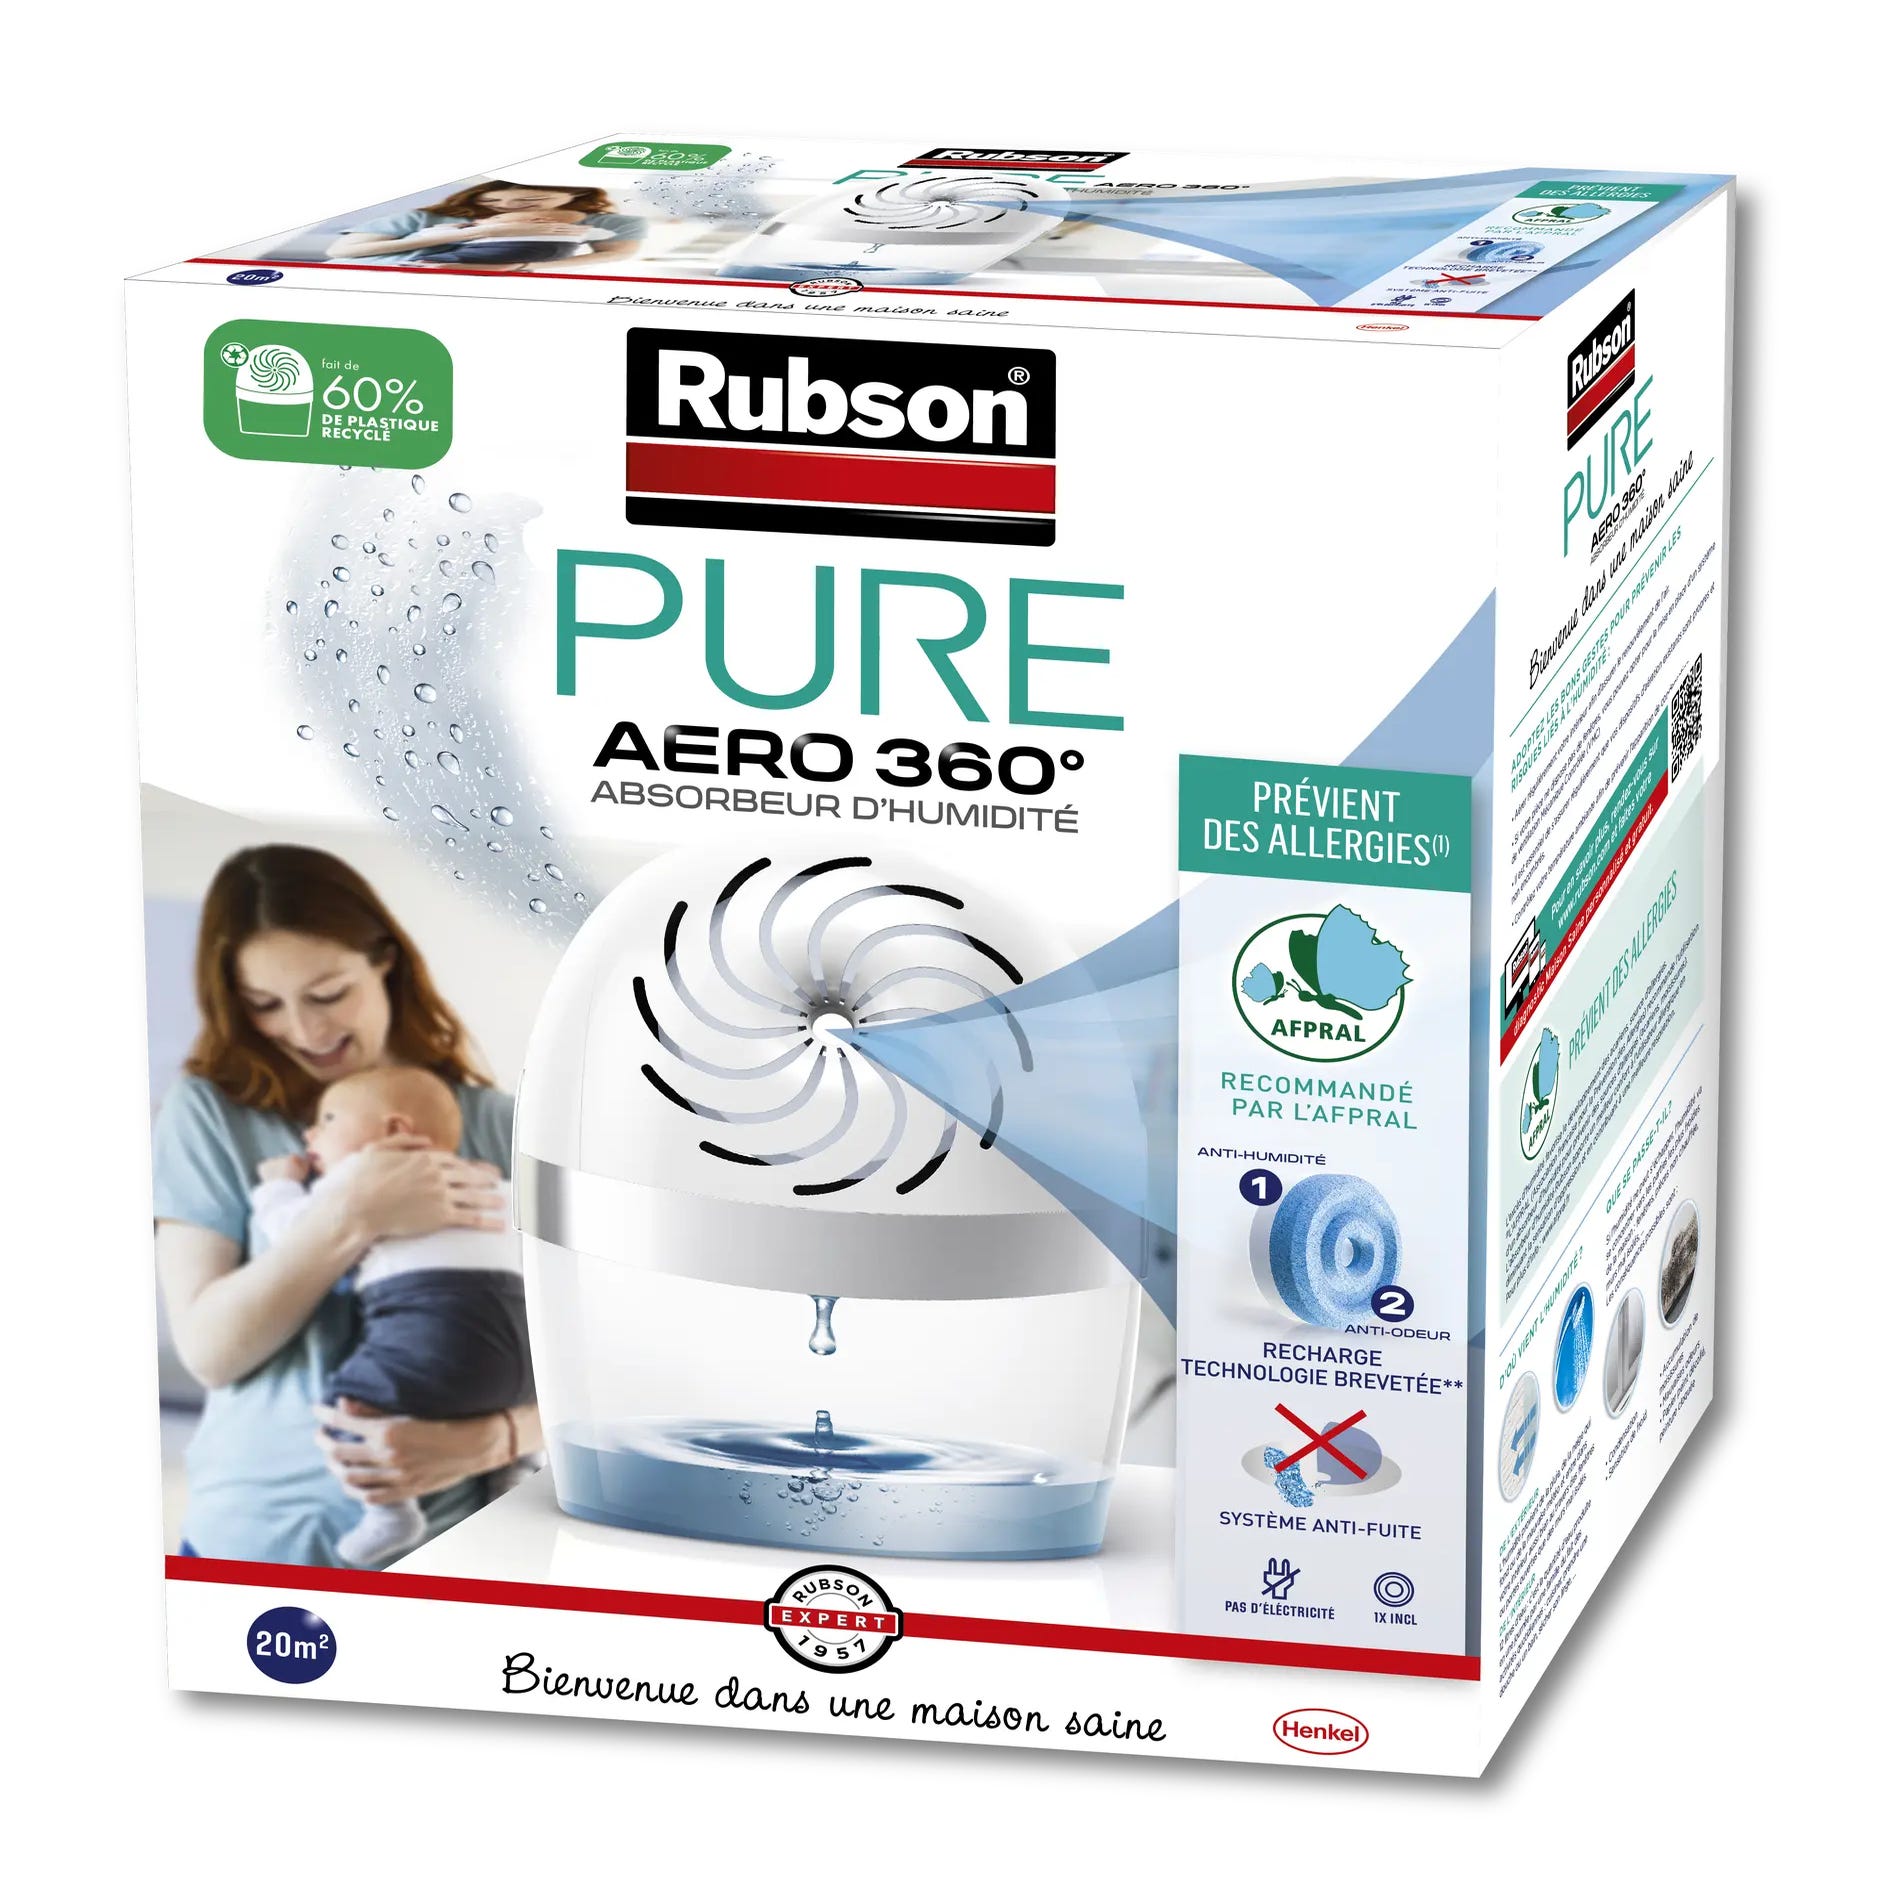 RUBSON - absorbeur d'humidité 20m² - 1852173